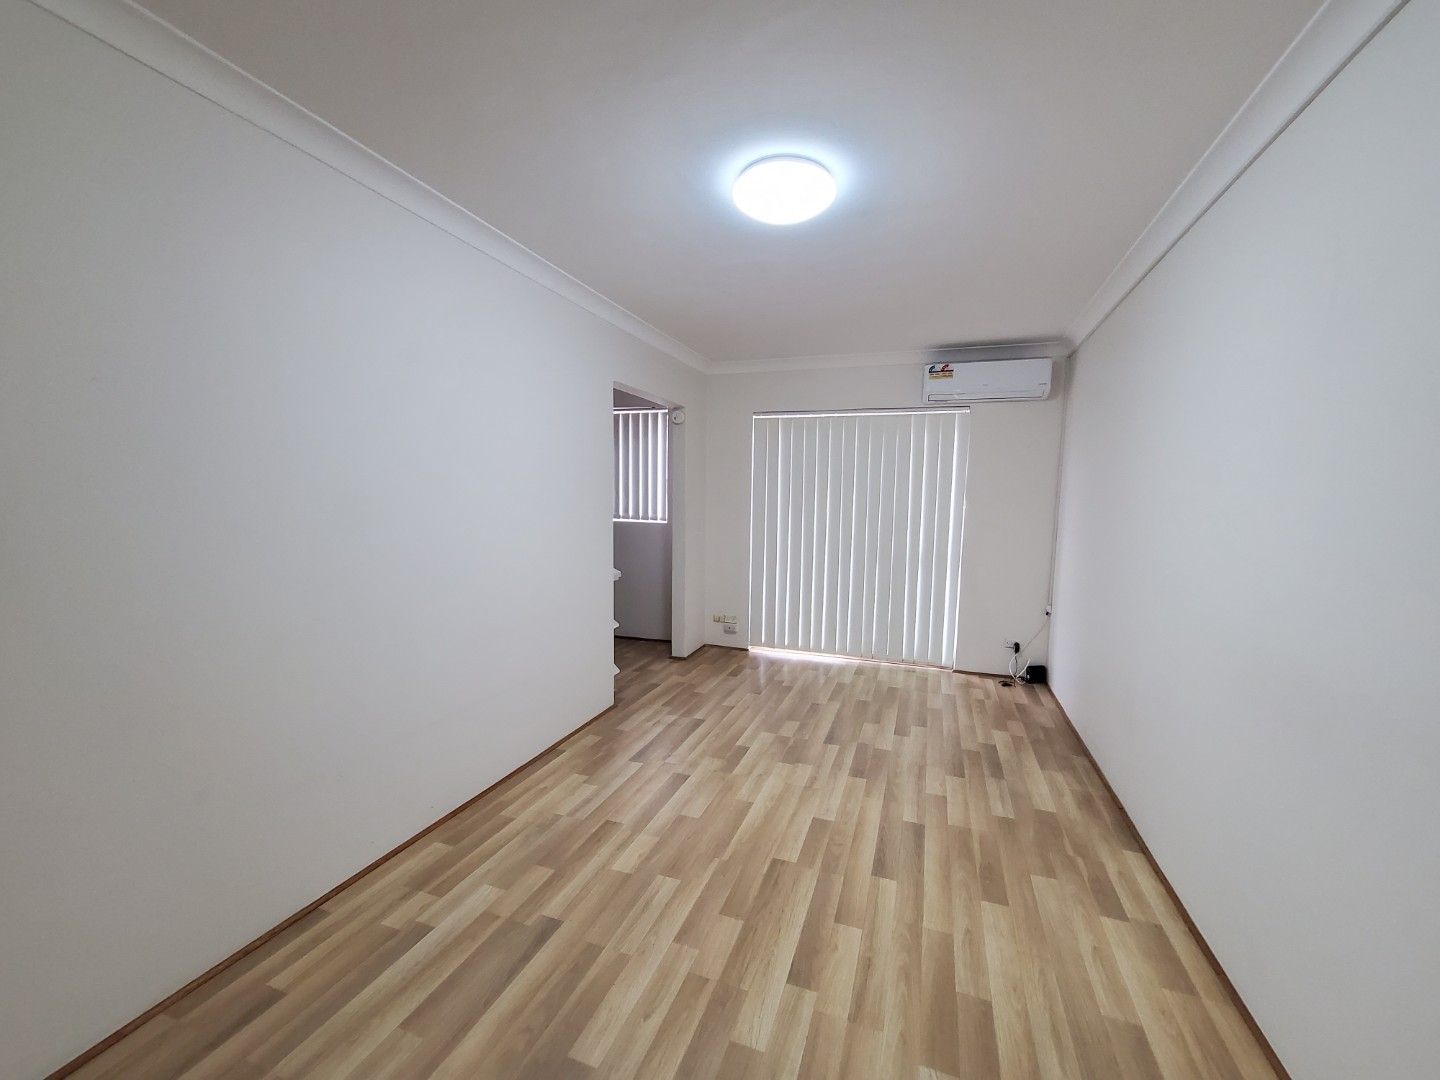 2 bedrooms Apartment / Unit / Flat in 4/17 Devlin Street RYDE NSW, 2112